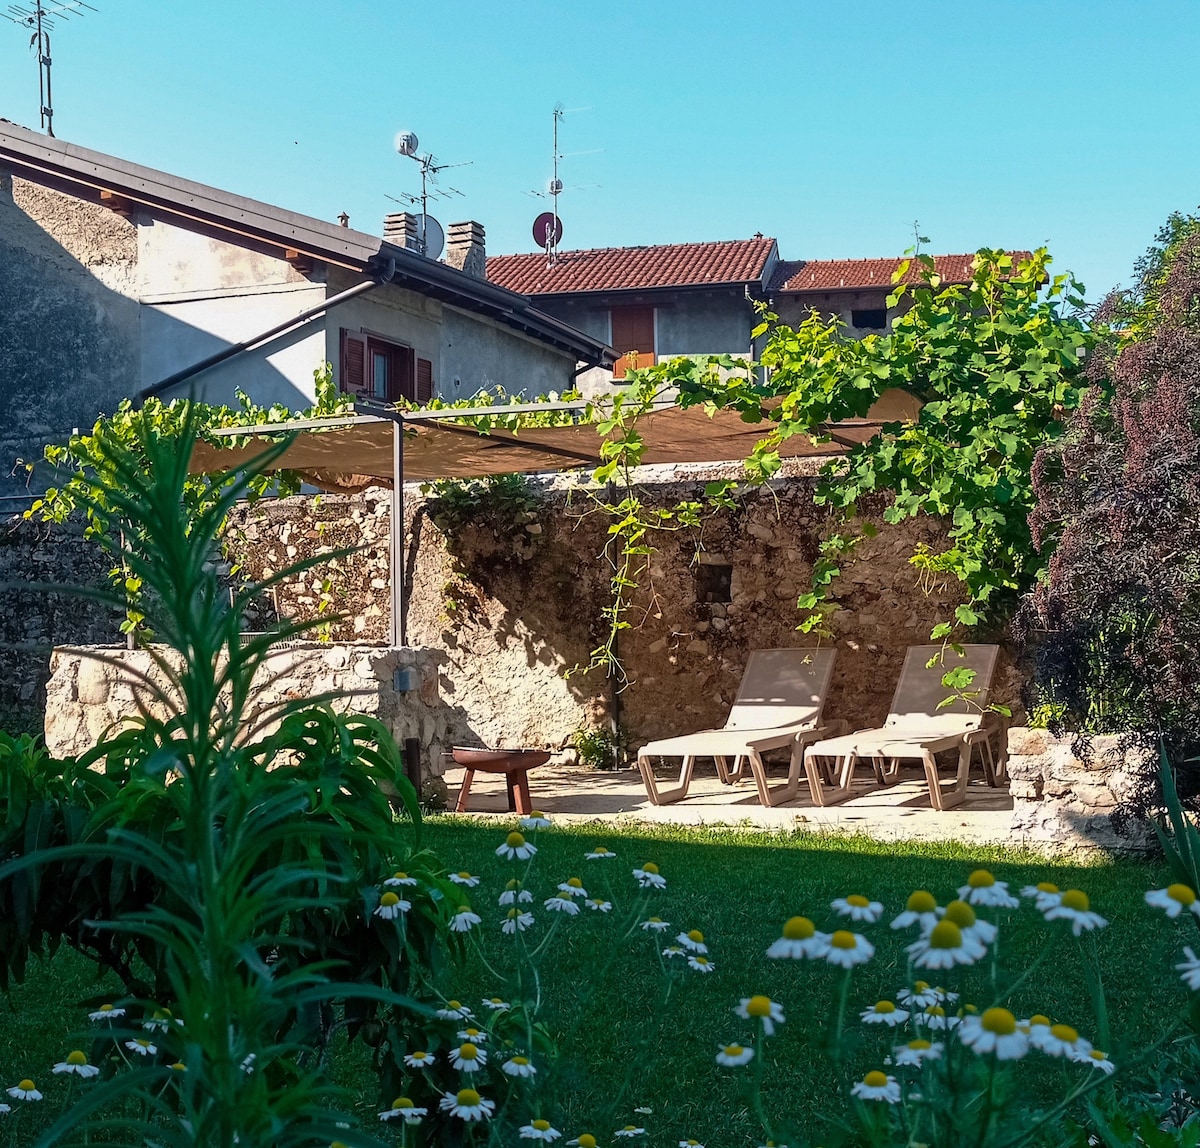 La Ca Del Tuscan, Farmstead with garden (Apt. 2)